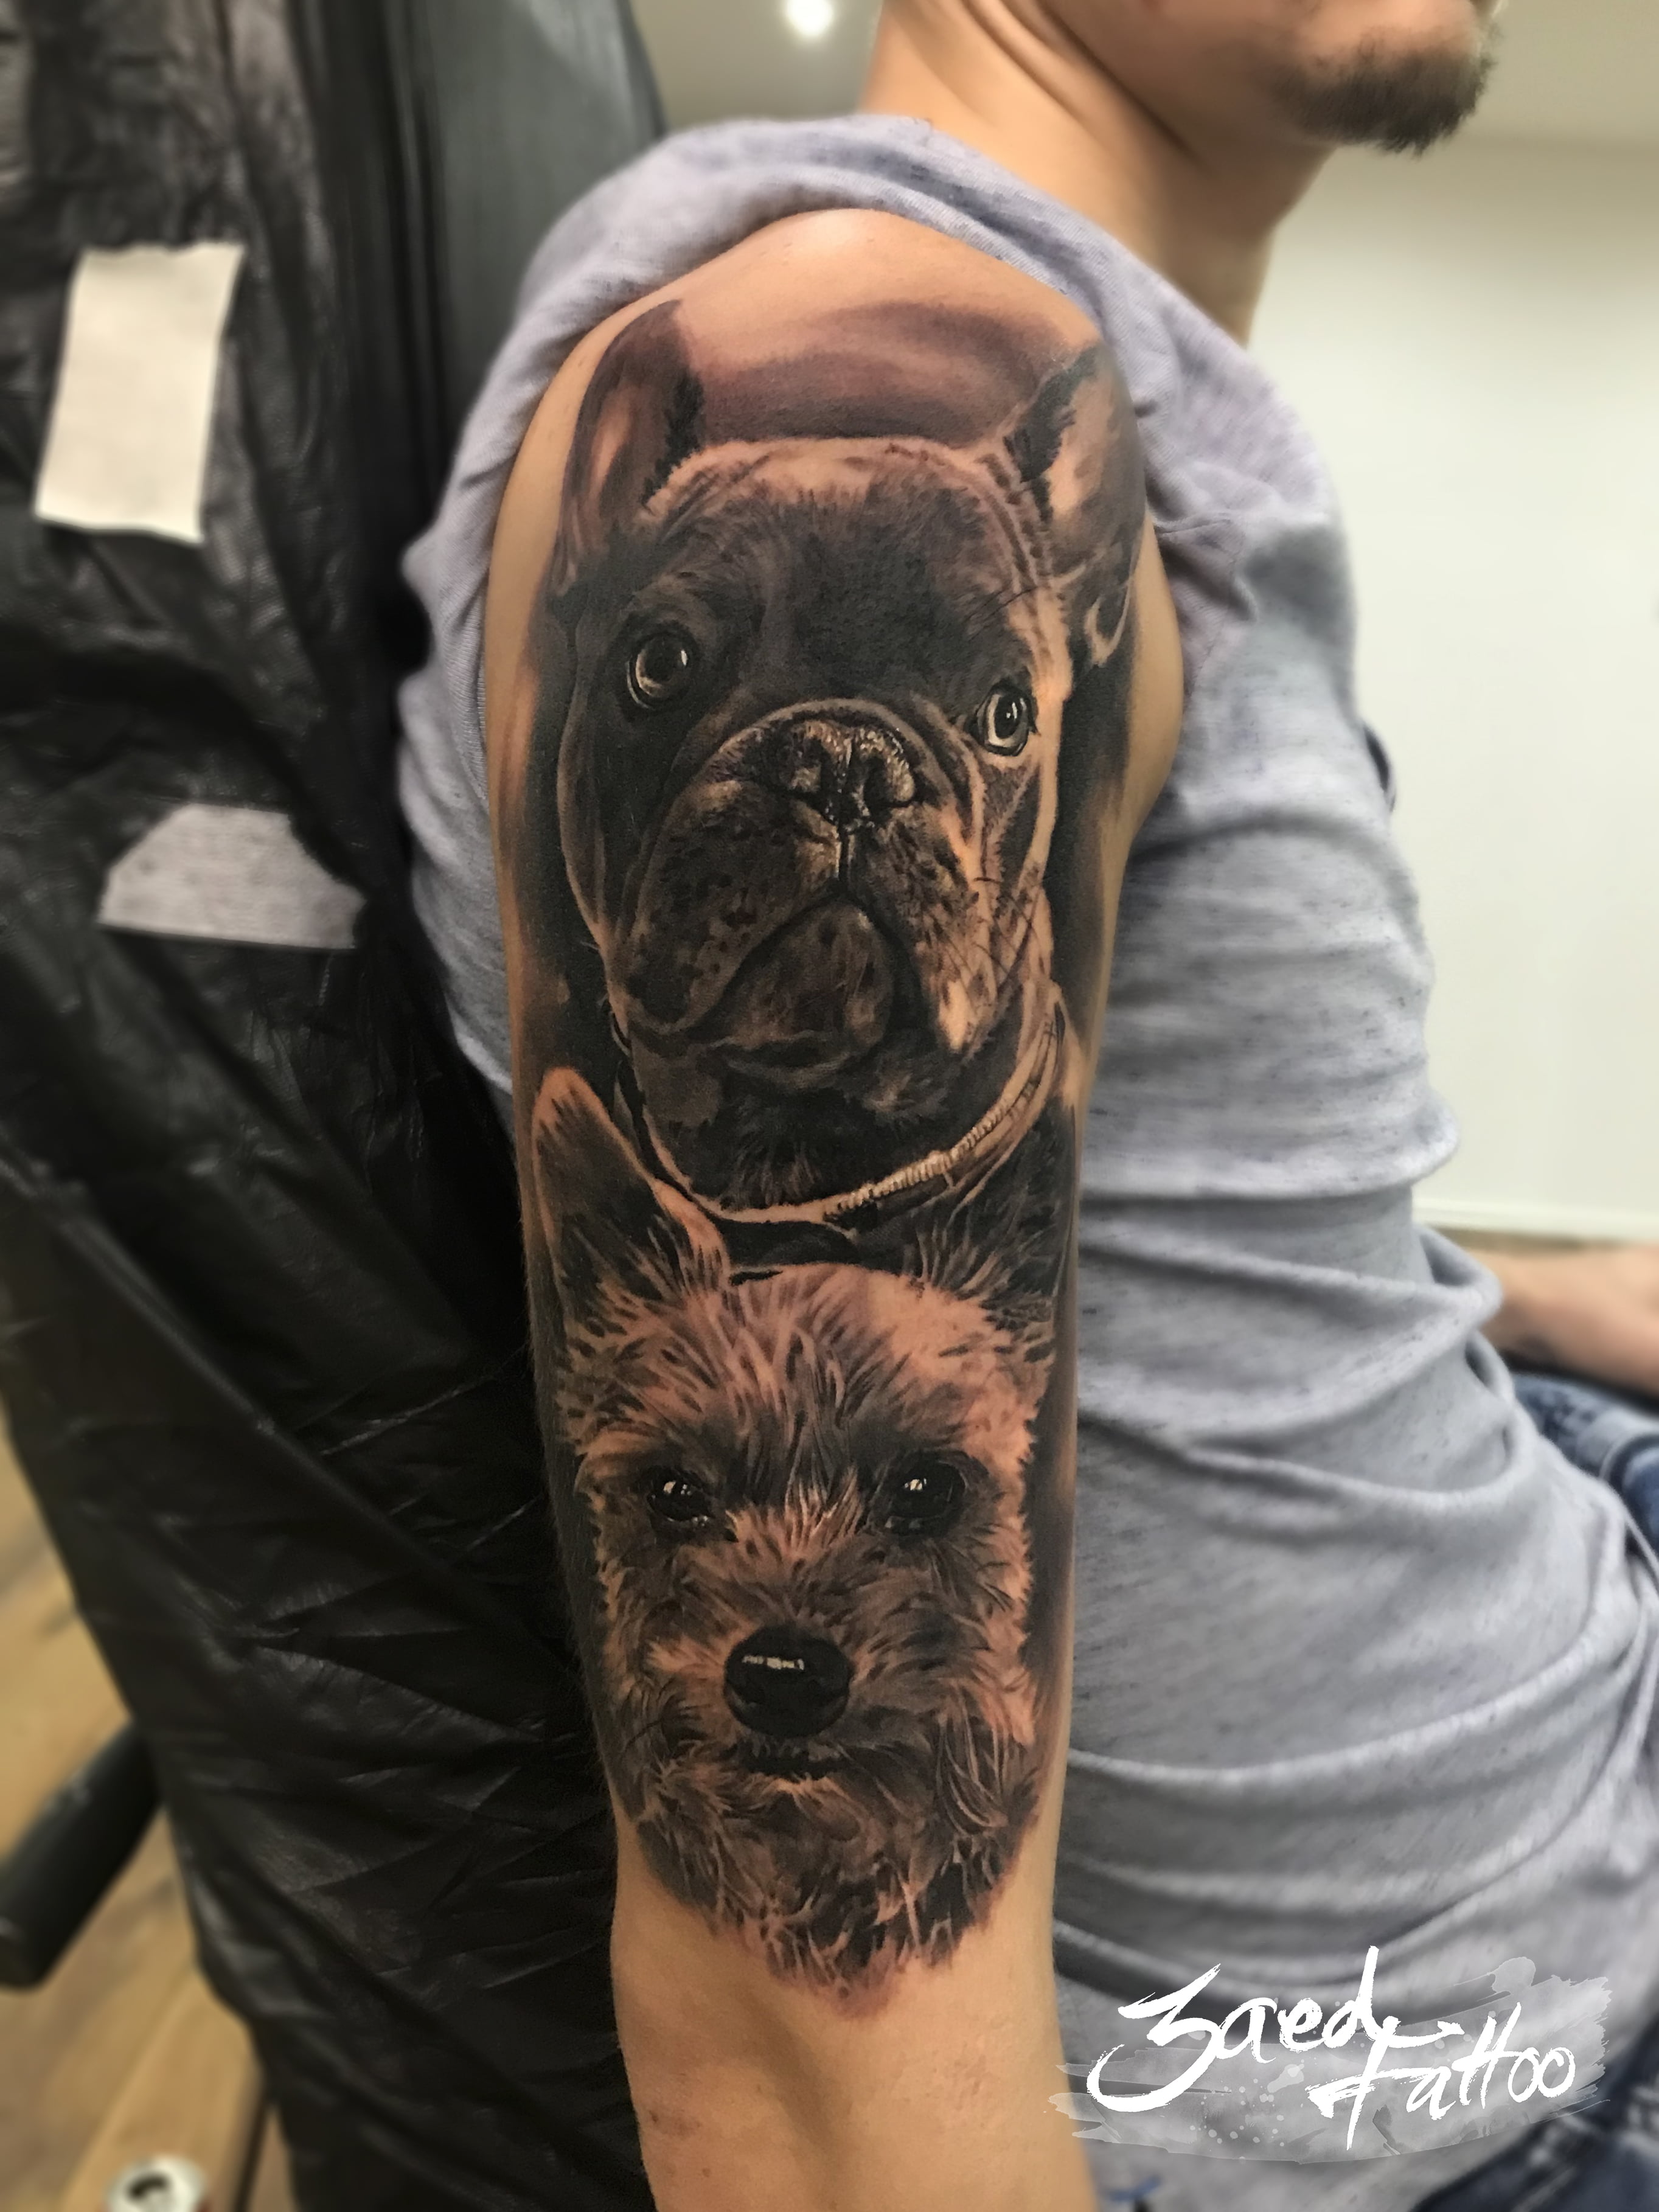 2 Dogs tattoo zaed